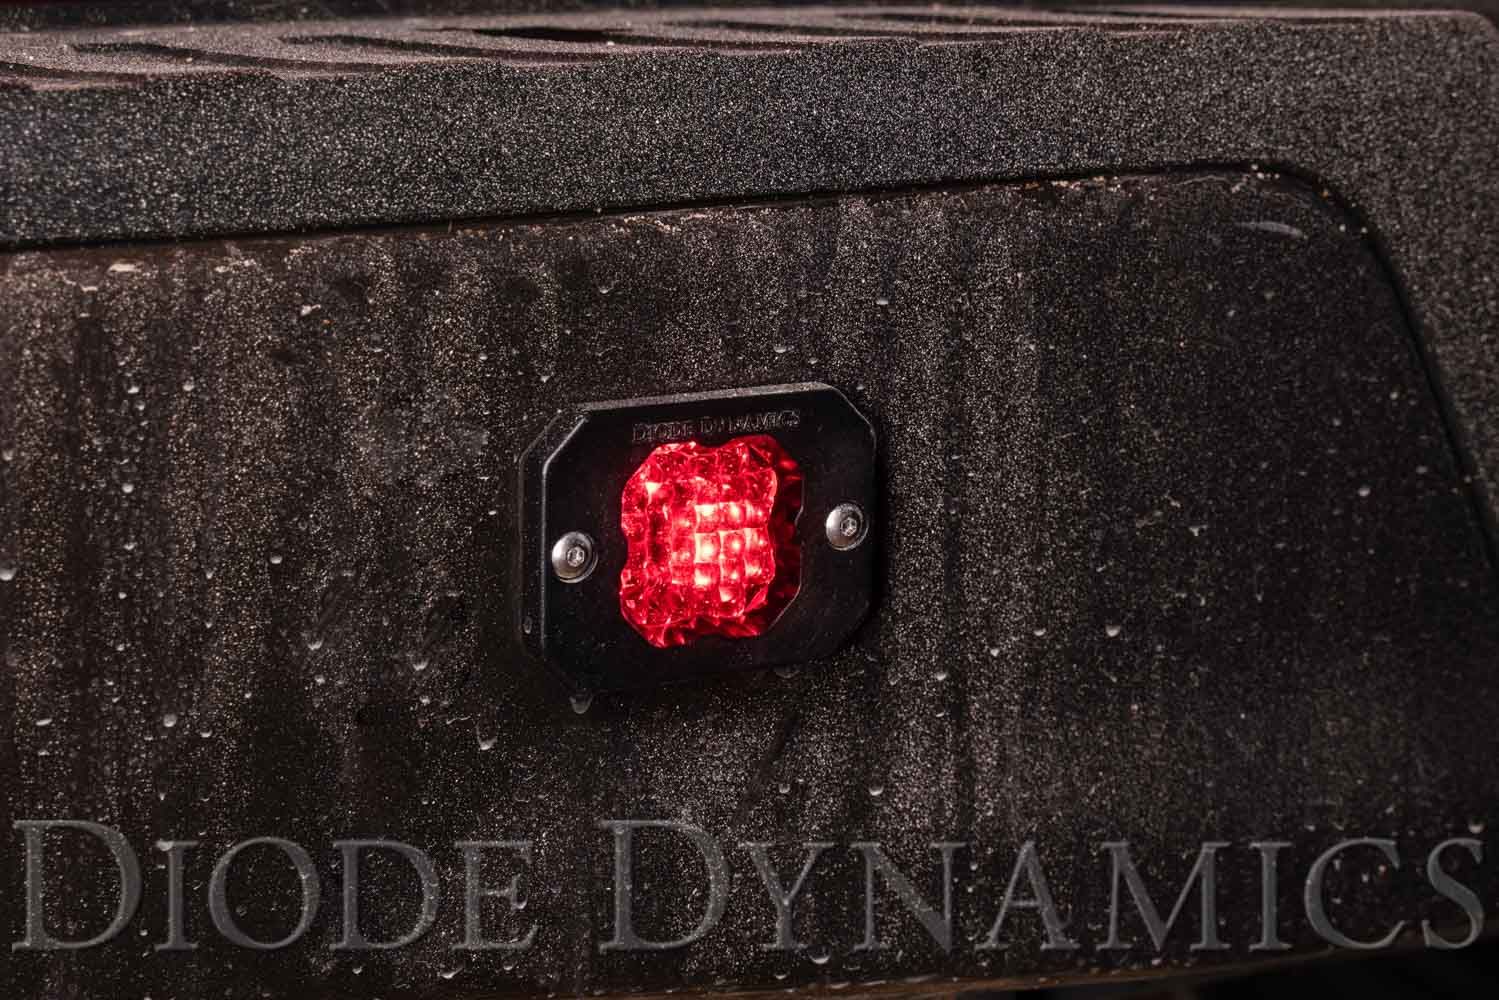 Diode Dynamics Stage Series C1 SSC1 White Flush Mount LED Pod (Pair)